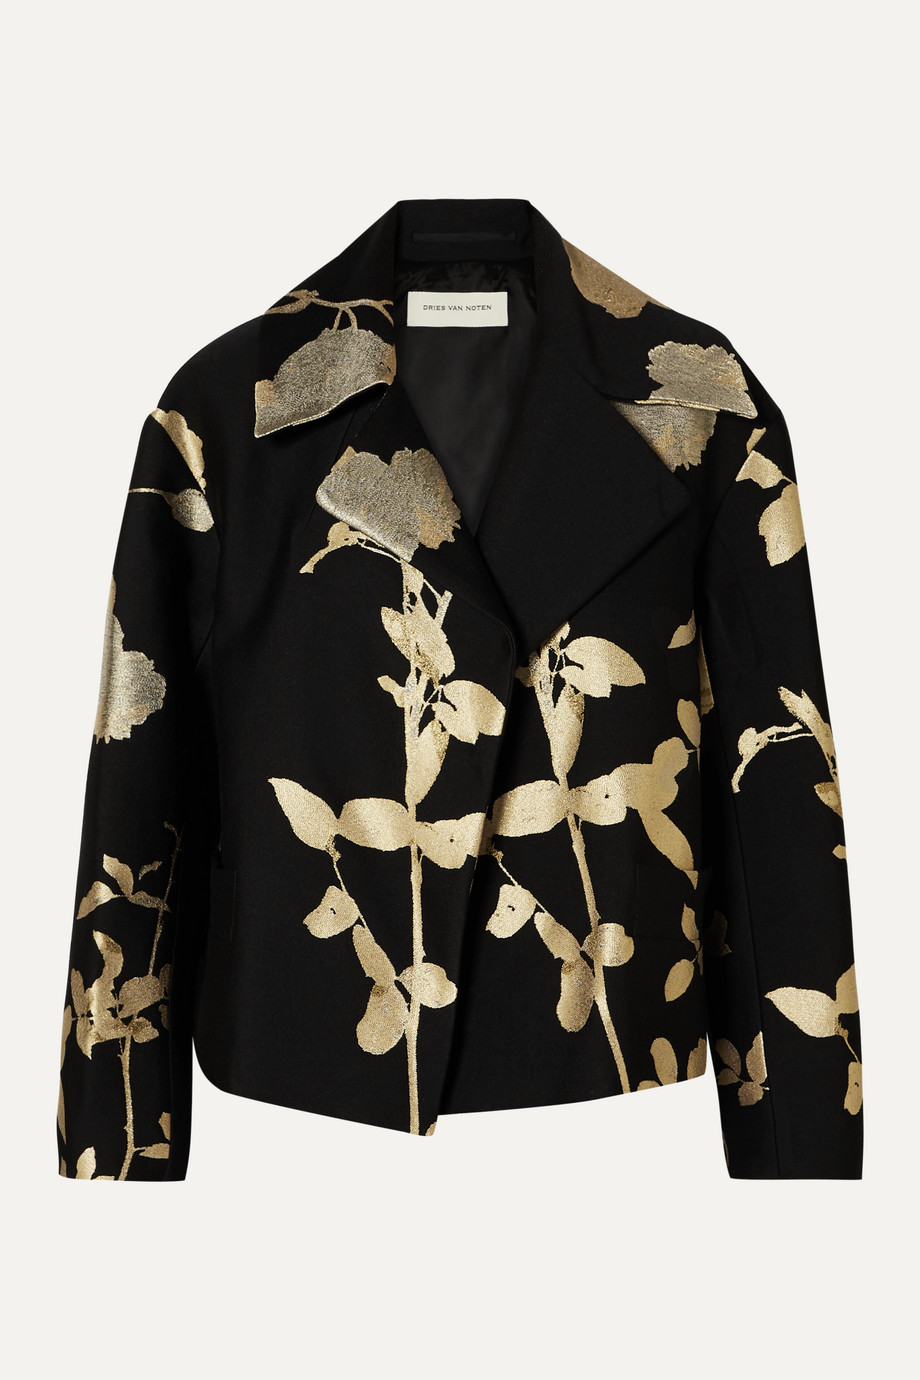 Dries Van Noten black and gold floral jacquard jacket